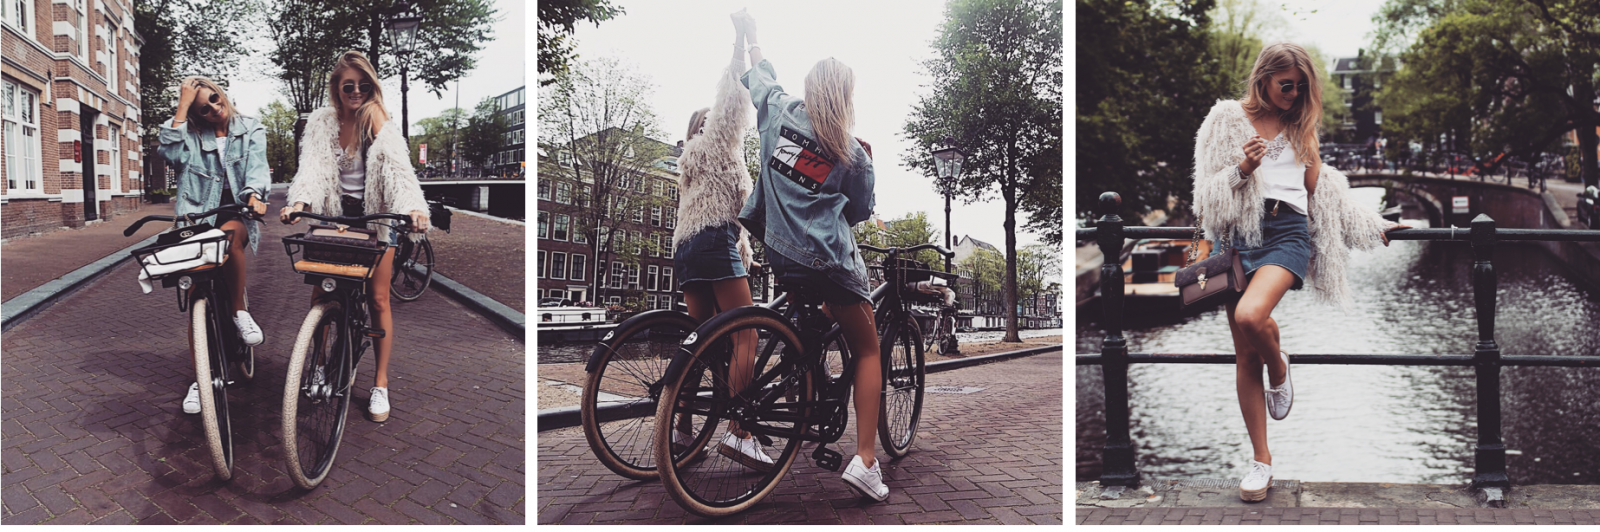 48 Hours In Amsterdam - Bike Ride